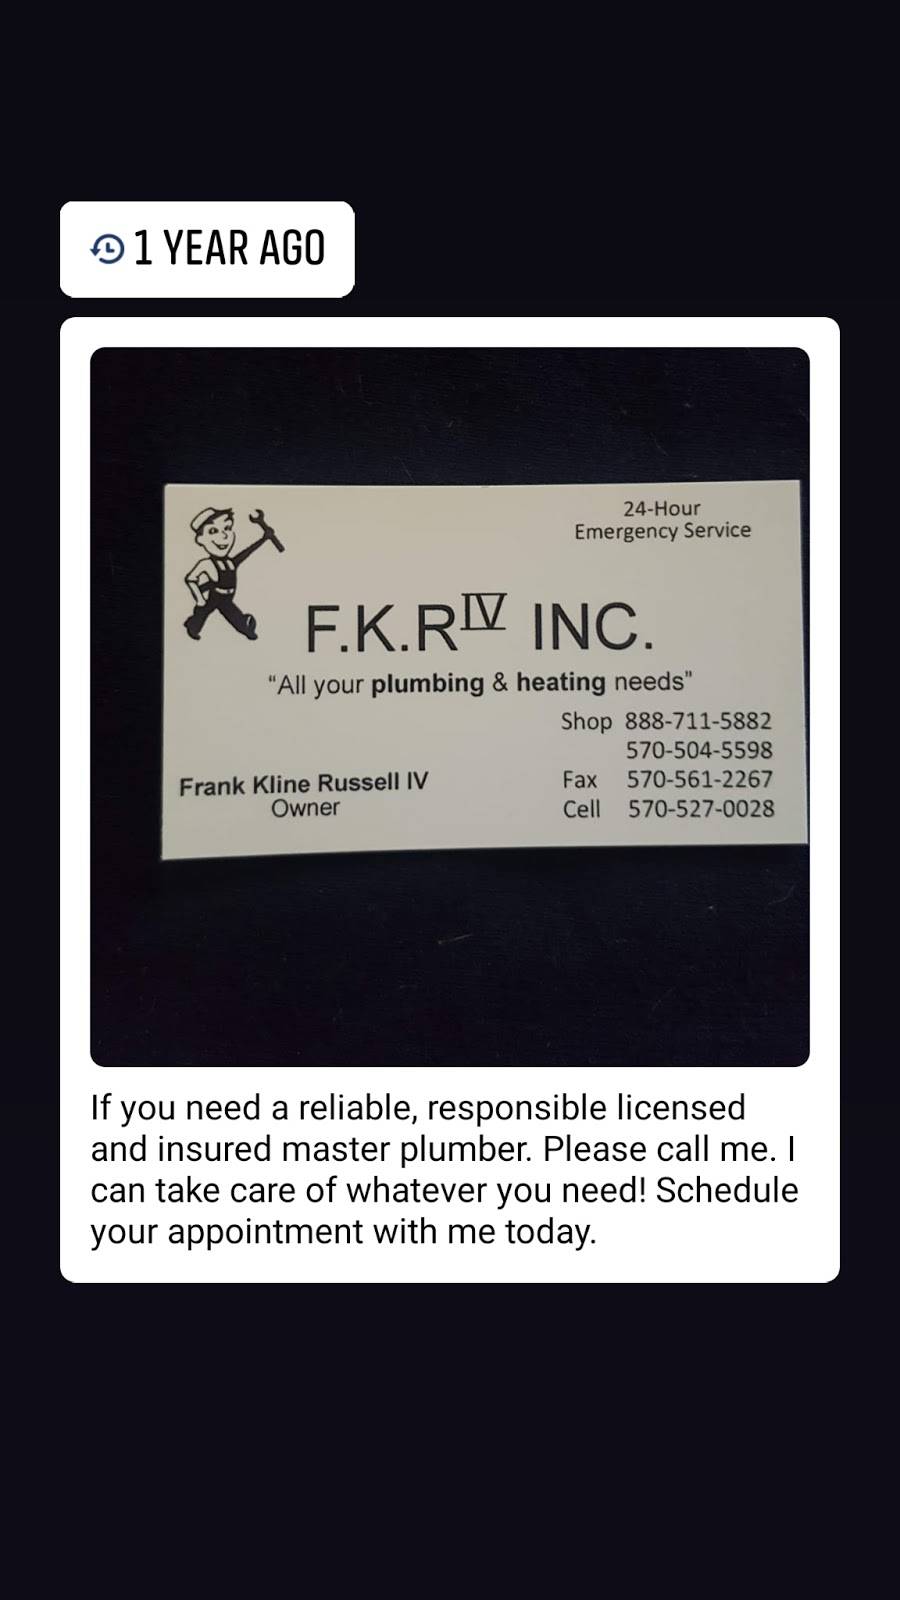 FKRIV Plumbing & Heating, Inc. | 3109 Brightside Ave, Bristol, PA 19007, USA | Phone: (888) 711-5882